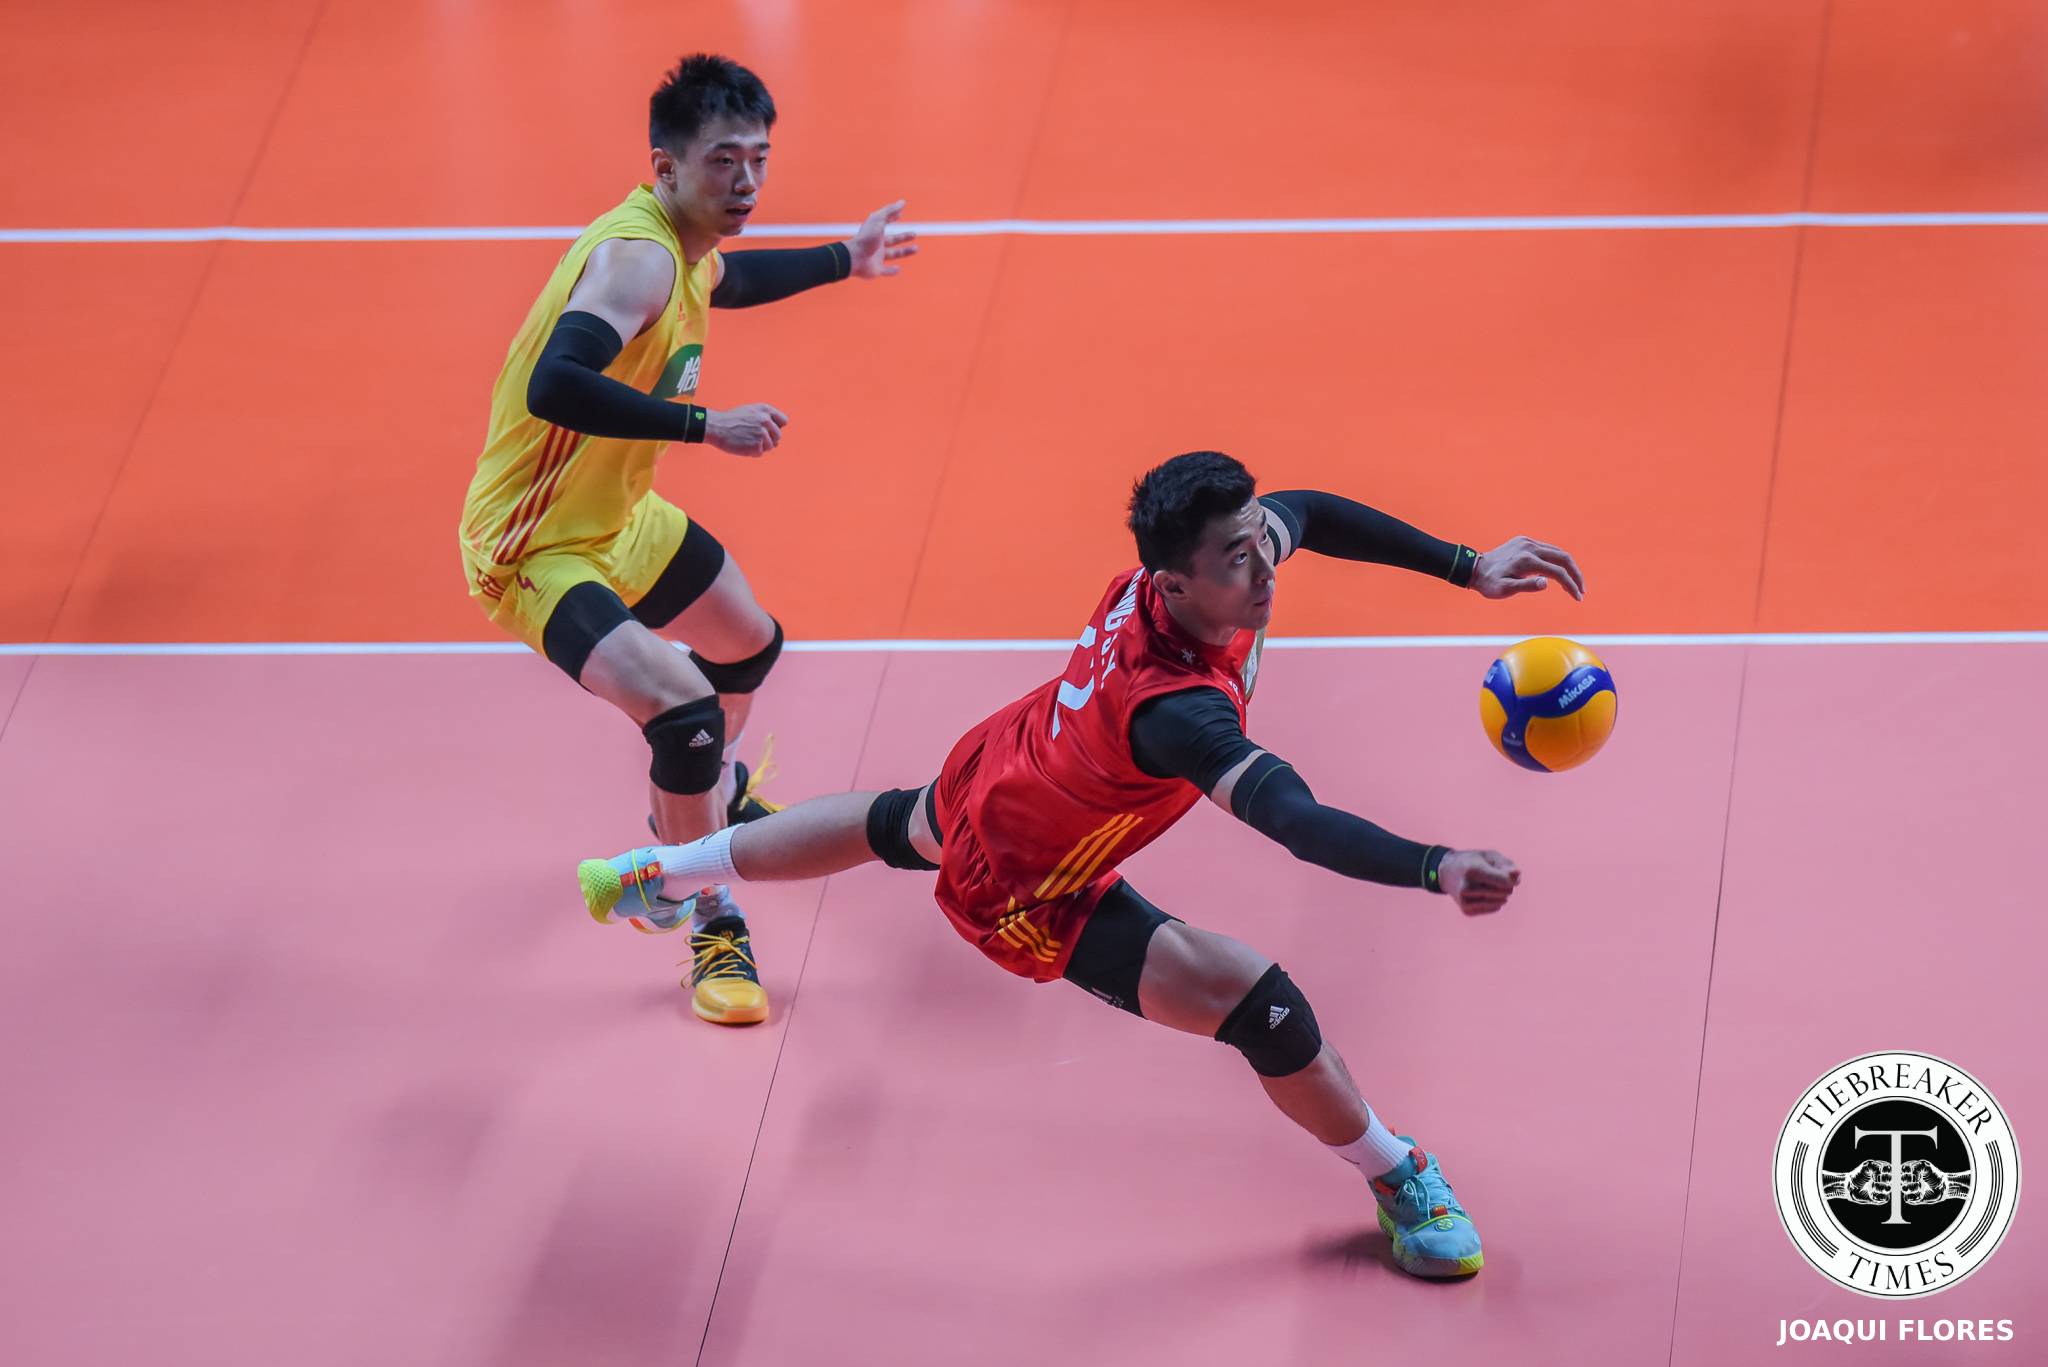 VNL-2022-Italy-vs.-China-Zhang-Jingyin-3086 VNL: Daniele Lavia, Italy smash China to close out Manila leg 2022 VNL Season News Volleyball  - philippine sports news